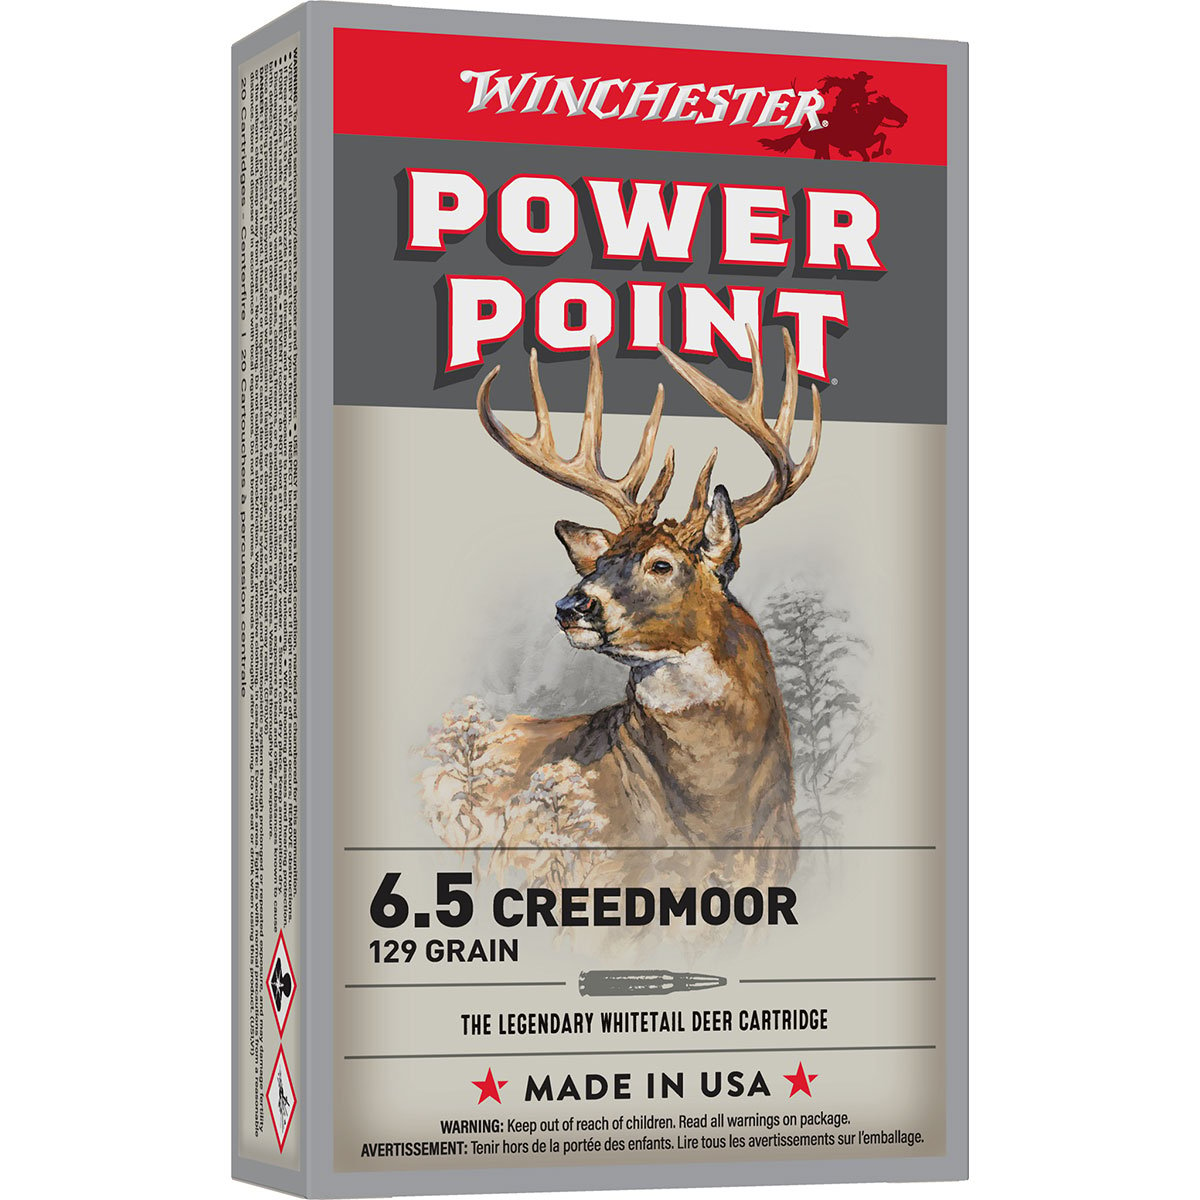 WINCHESTER - POWER POINT 6.5 CREEDMOOR RIFLE AMMO